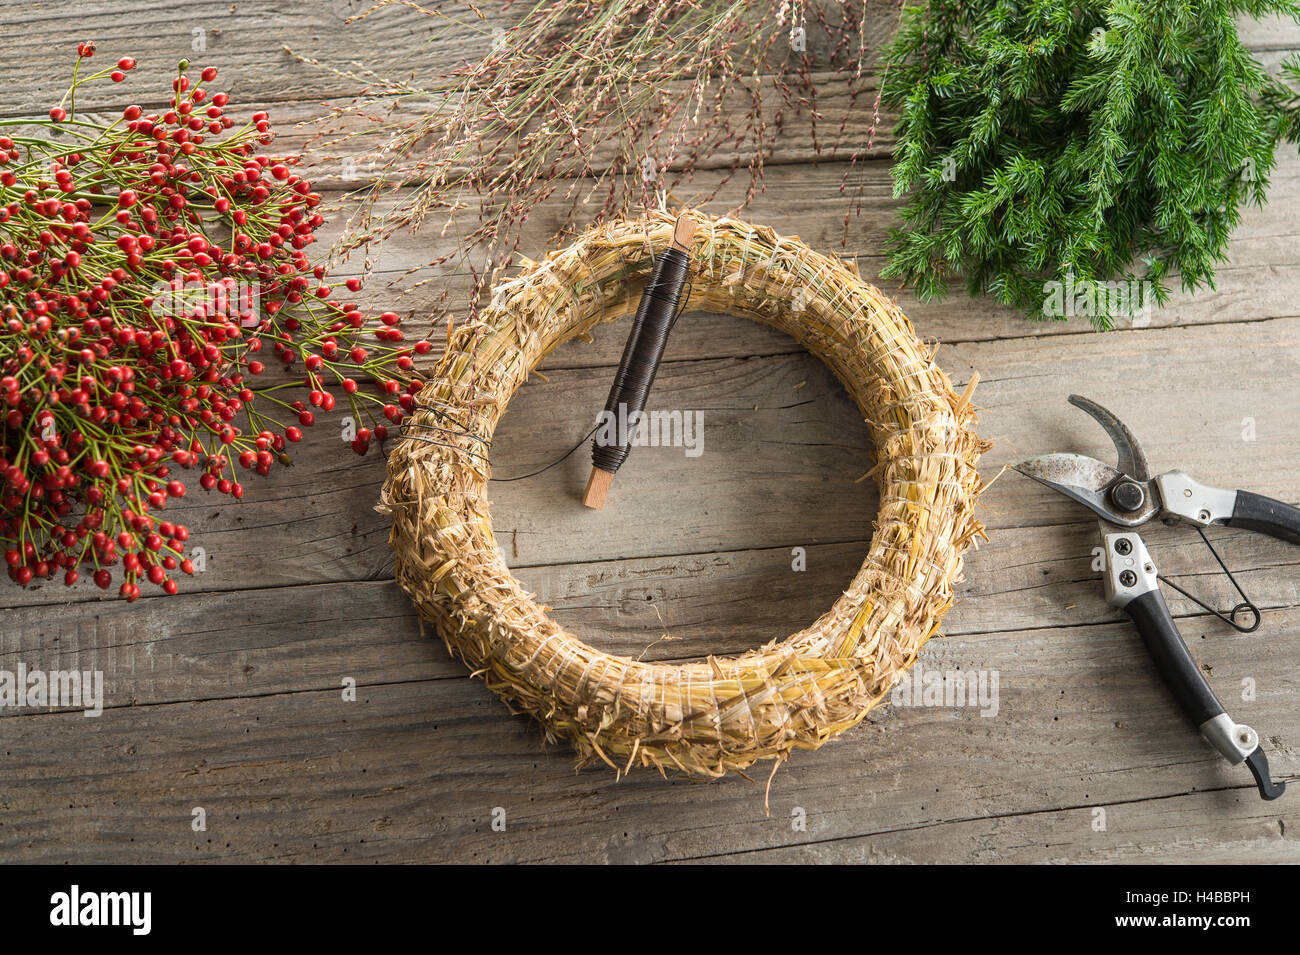 Autumn Wreath items on wooden plate, binding tool, based on straw wreath, juniper (Juniperus), rose hip (Rosa canina) Stock Photo